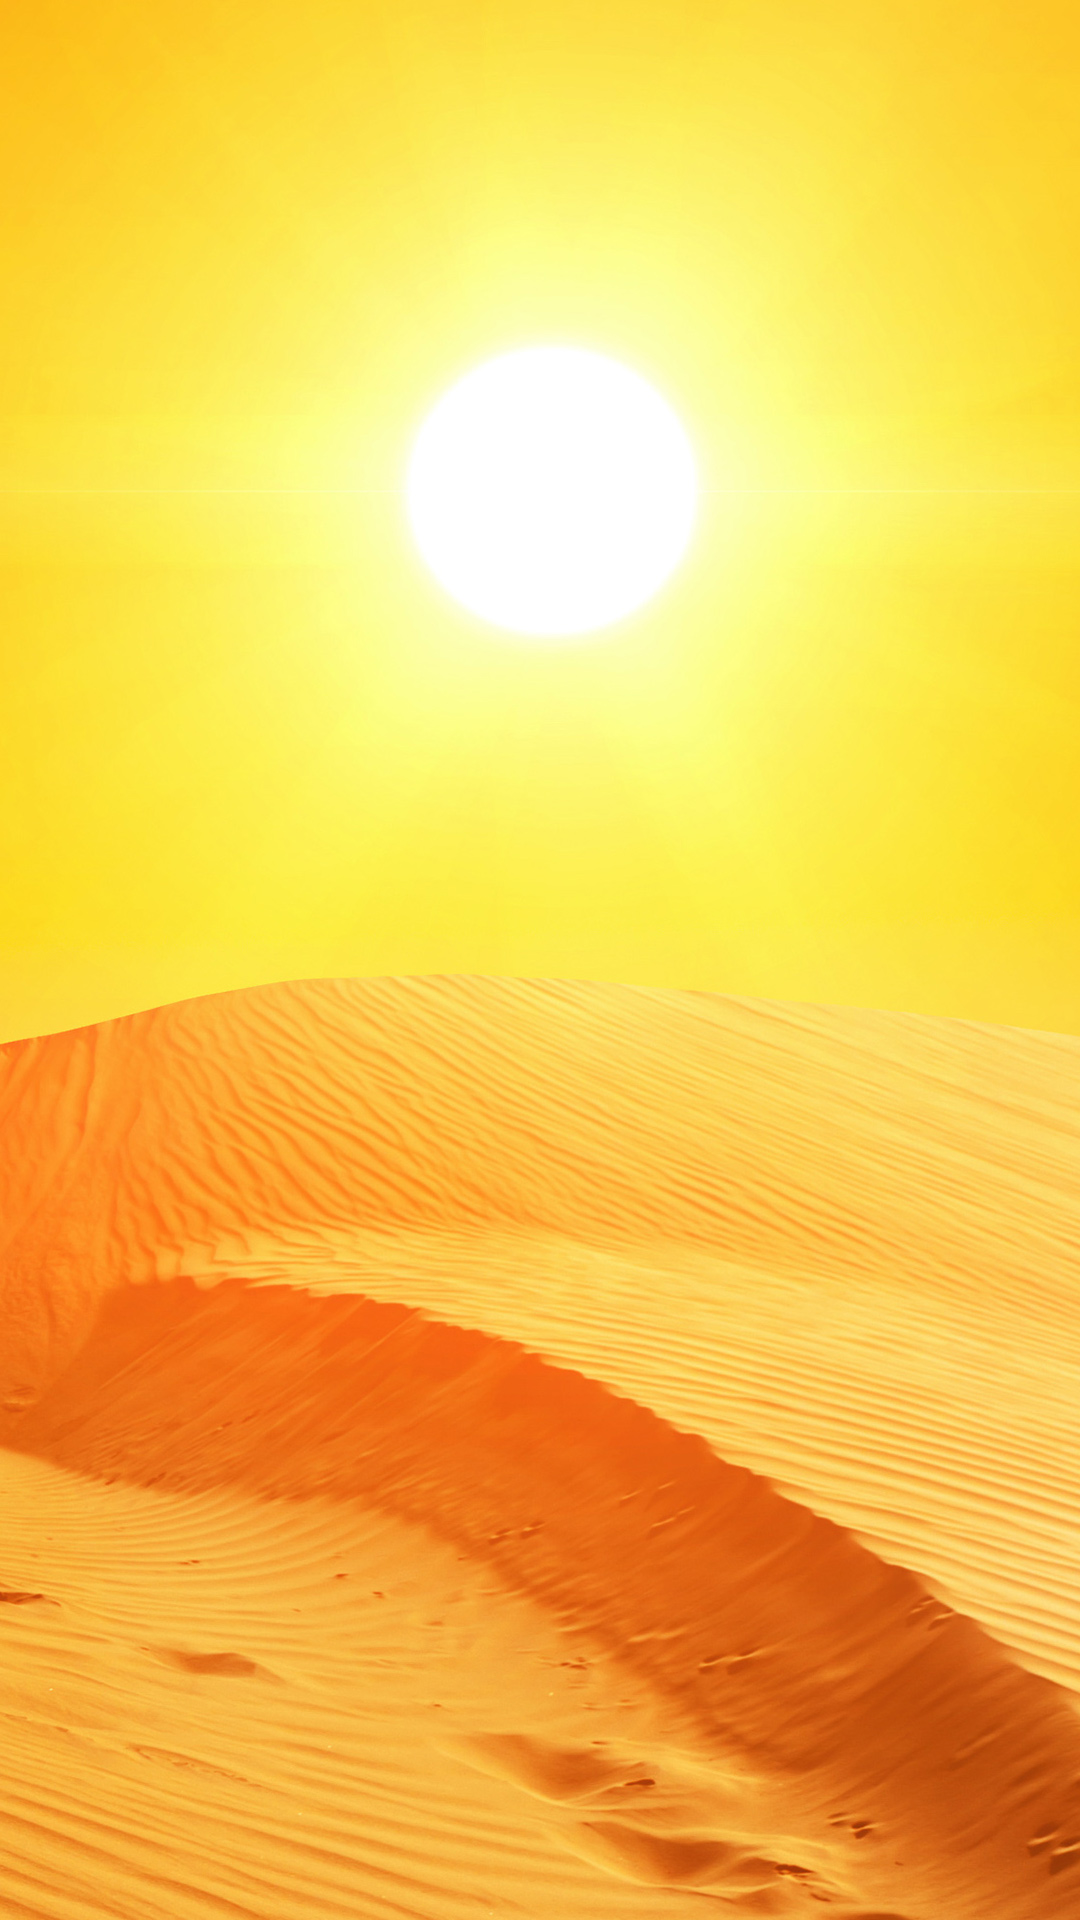 desert sun clipart